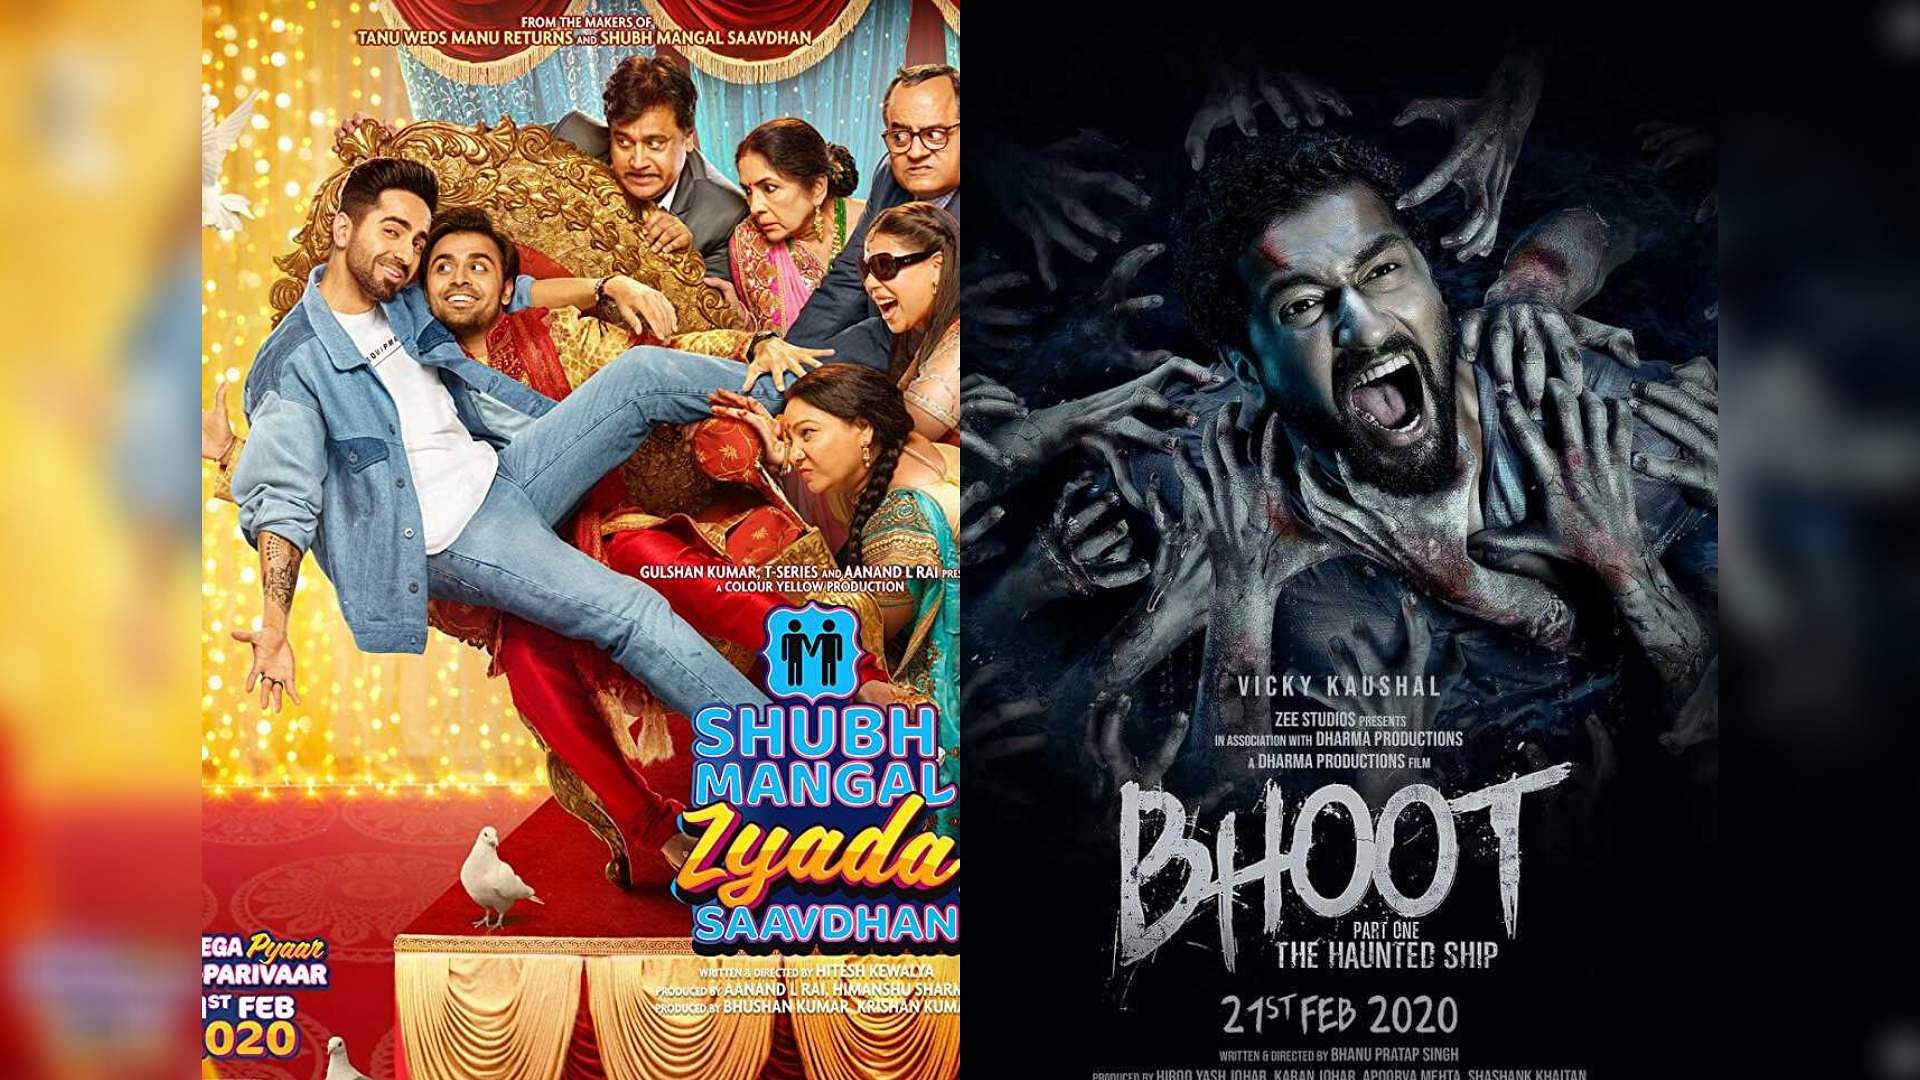 Ayushmann’s <i>Shubh Mangal Zyada Saavdhan </i>had a better opening weekend than Vicky’s <i>Bhoot</i>.